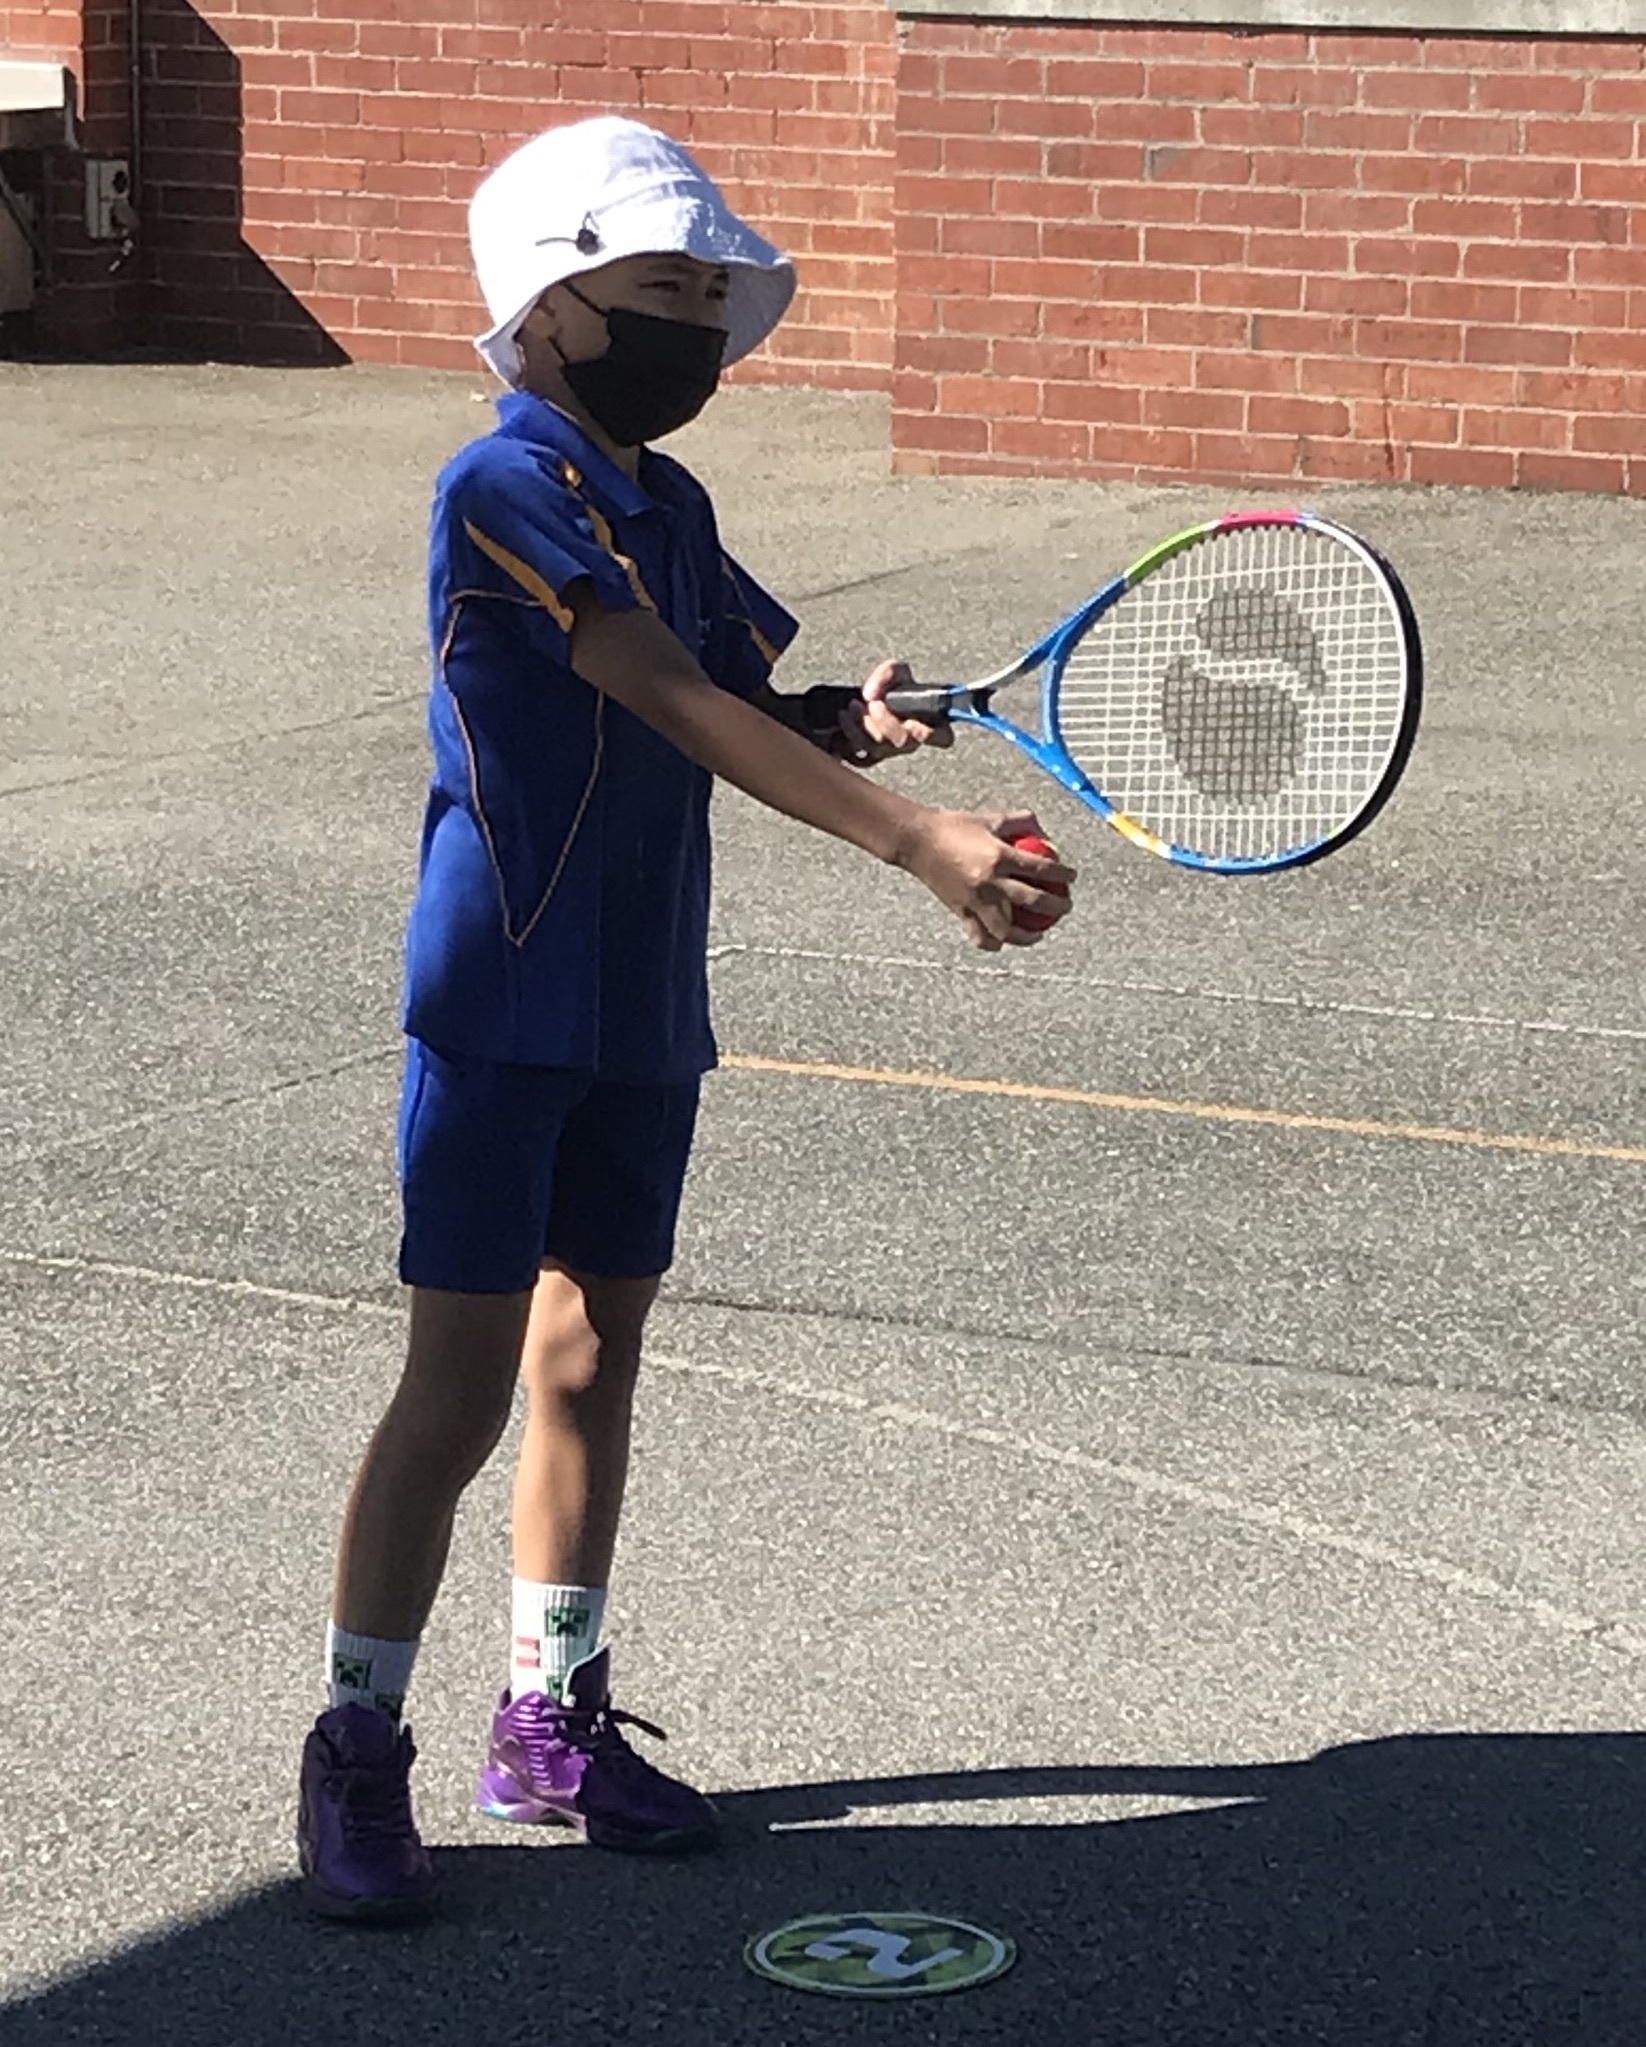 Liam plays tennis